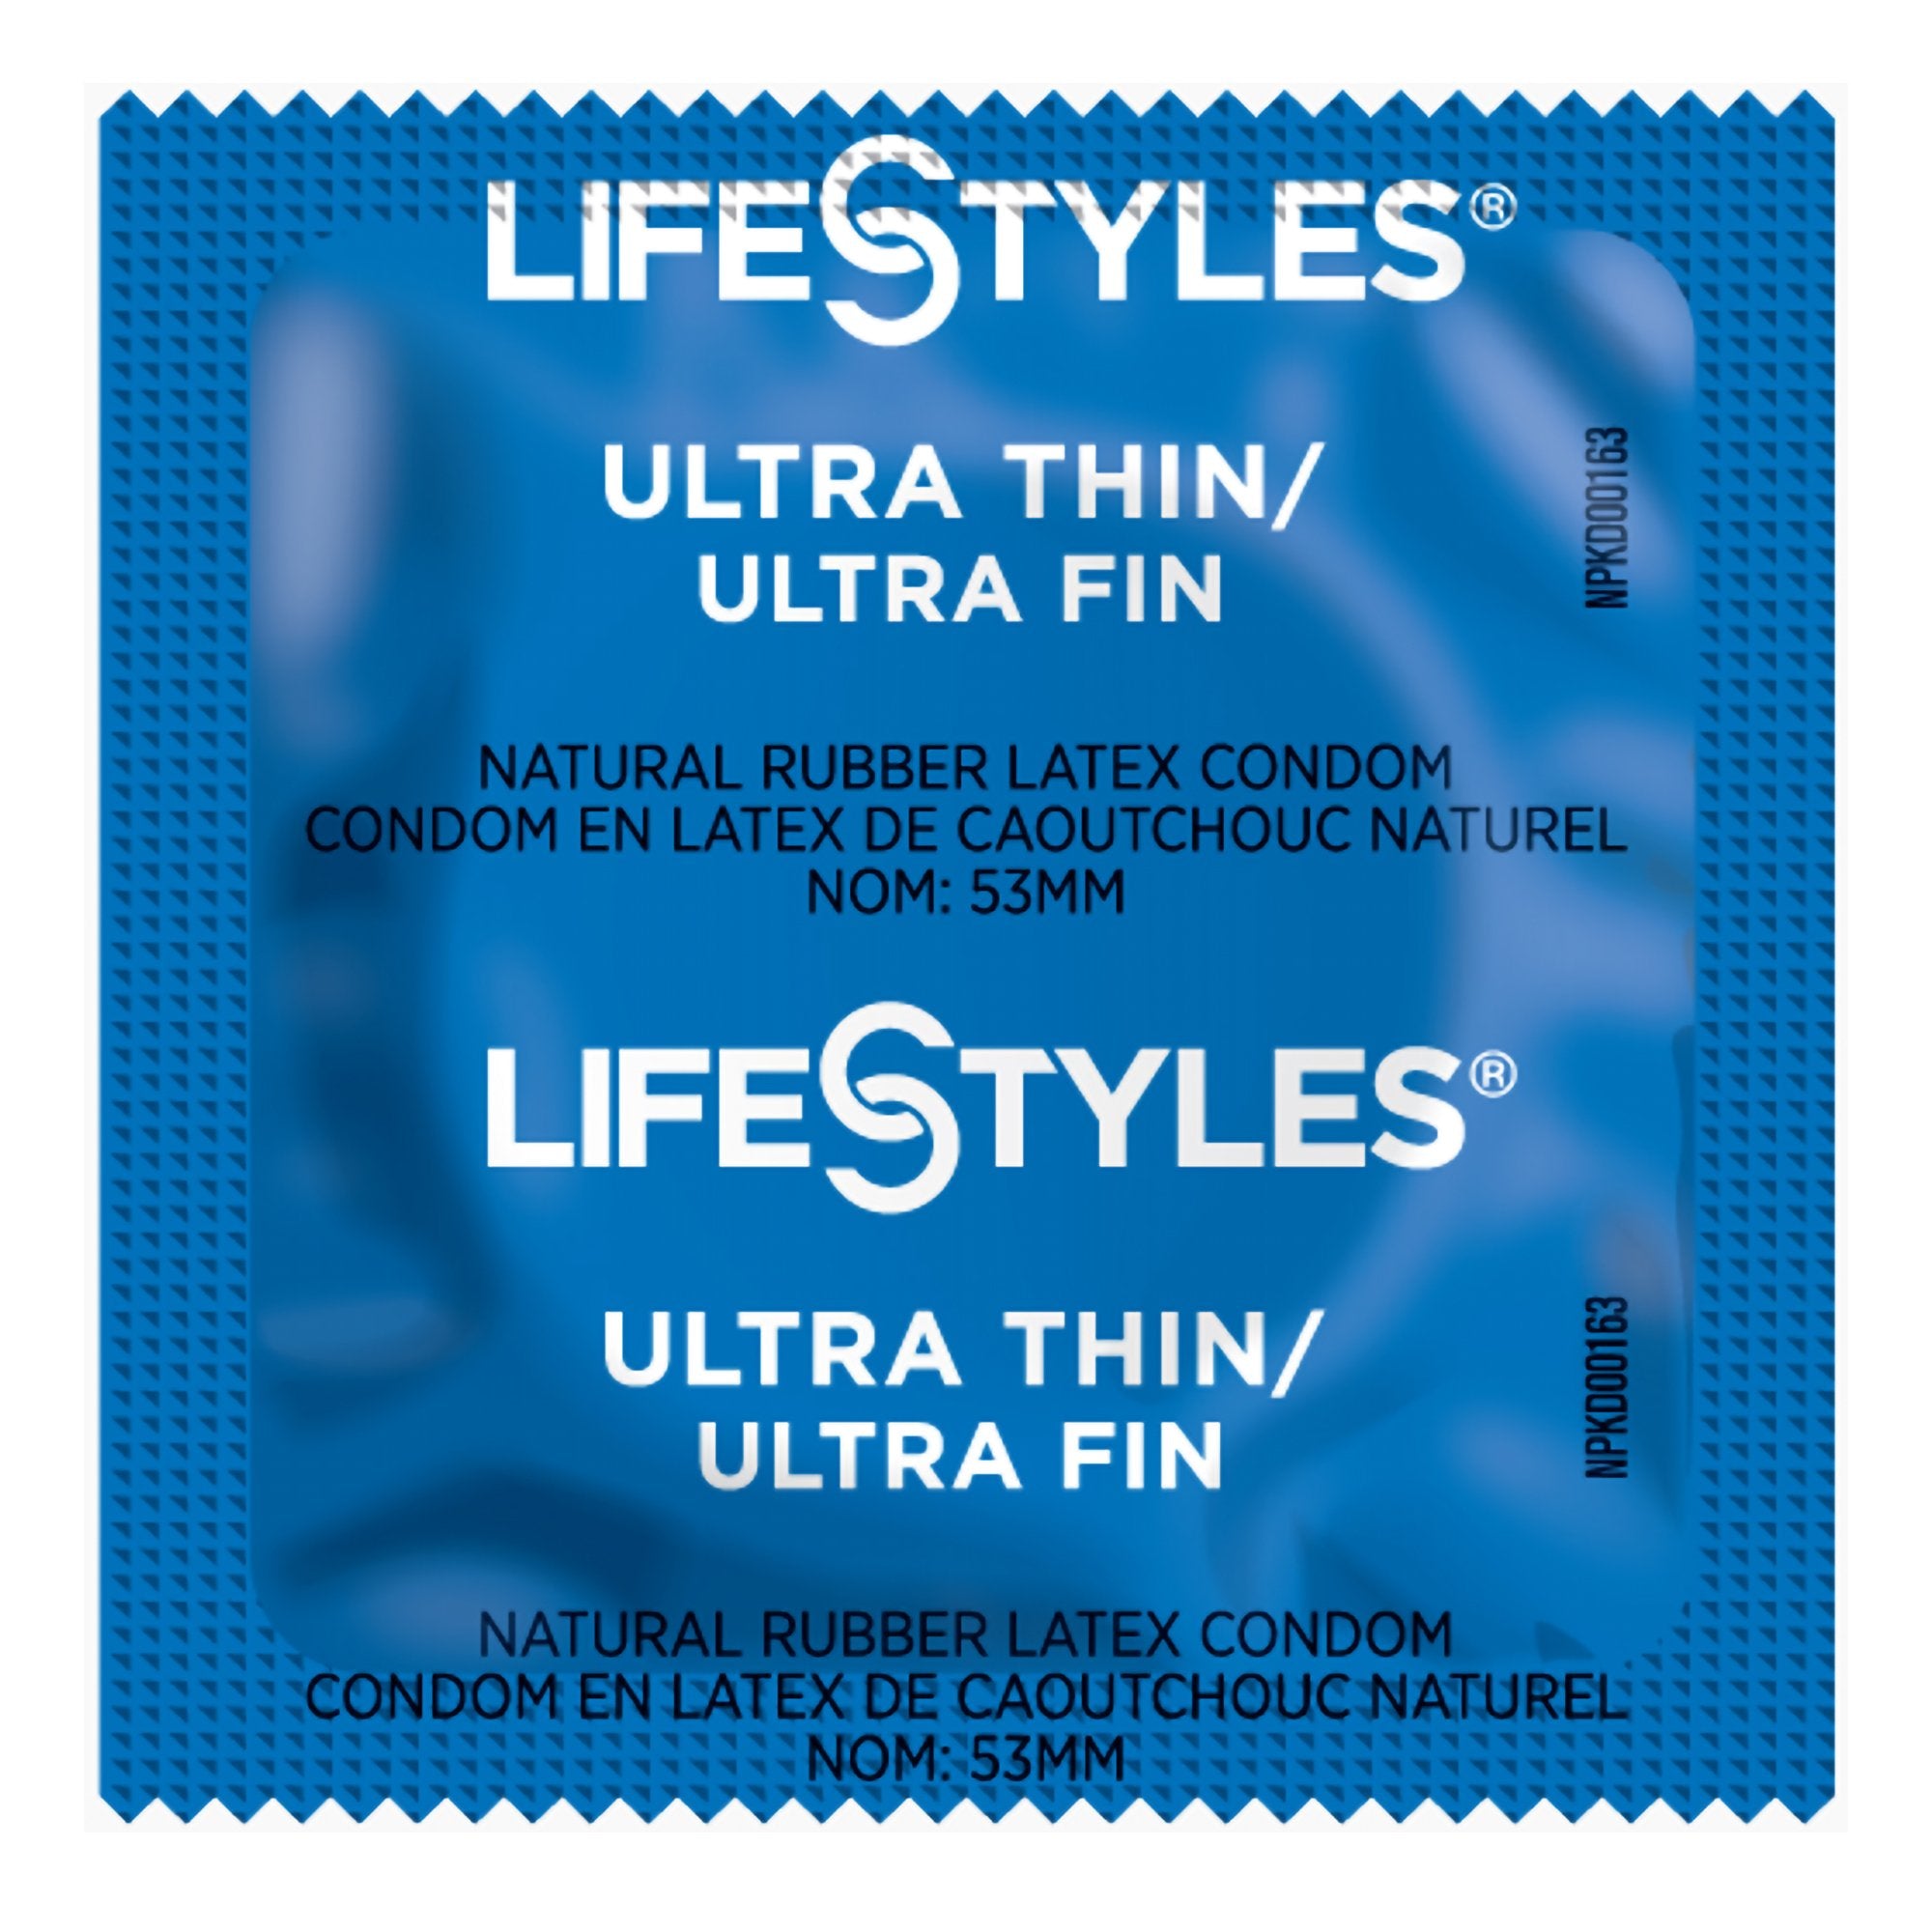 Lifestyles® Ultra Thin Latex Condom (1 Unit)